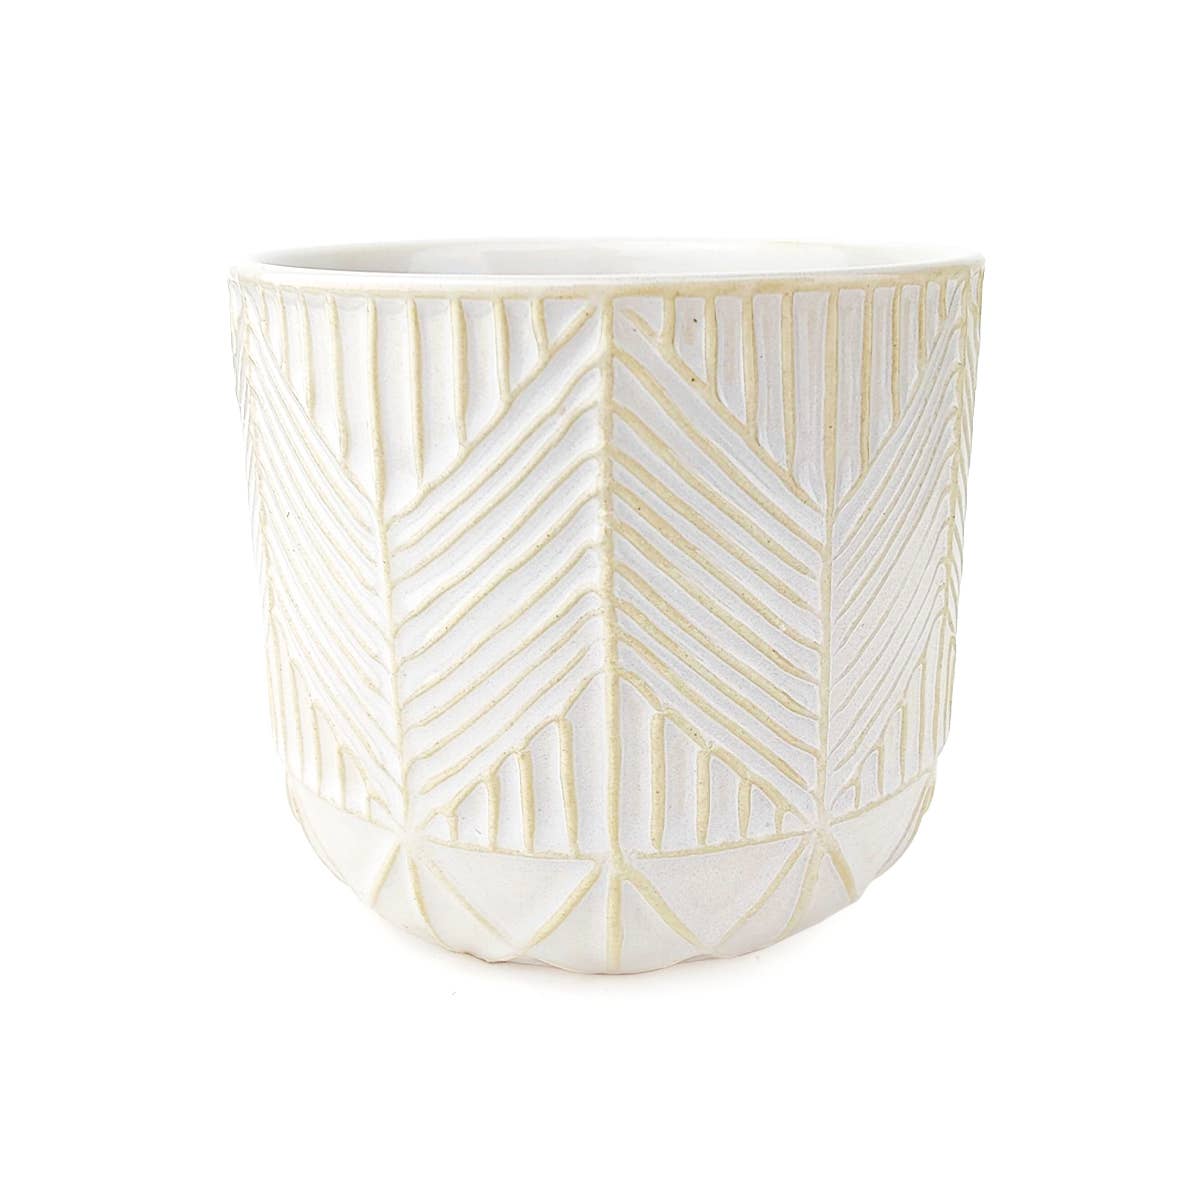 3.25" White Ceramic Pots For Plants